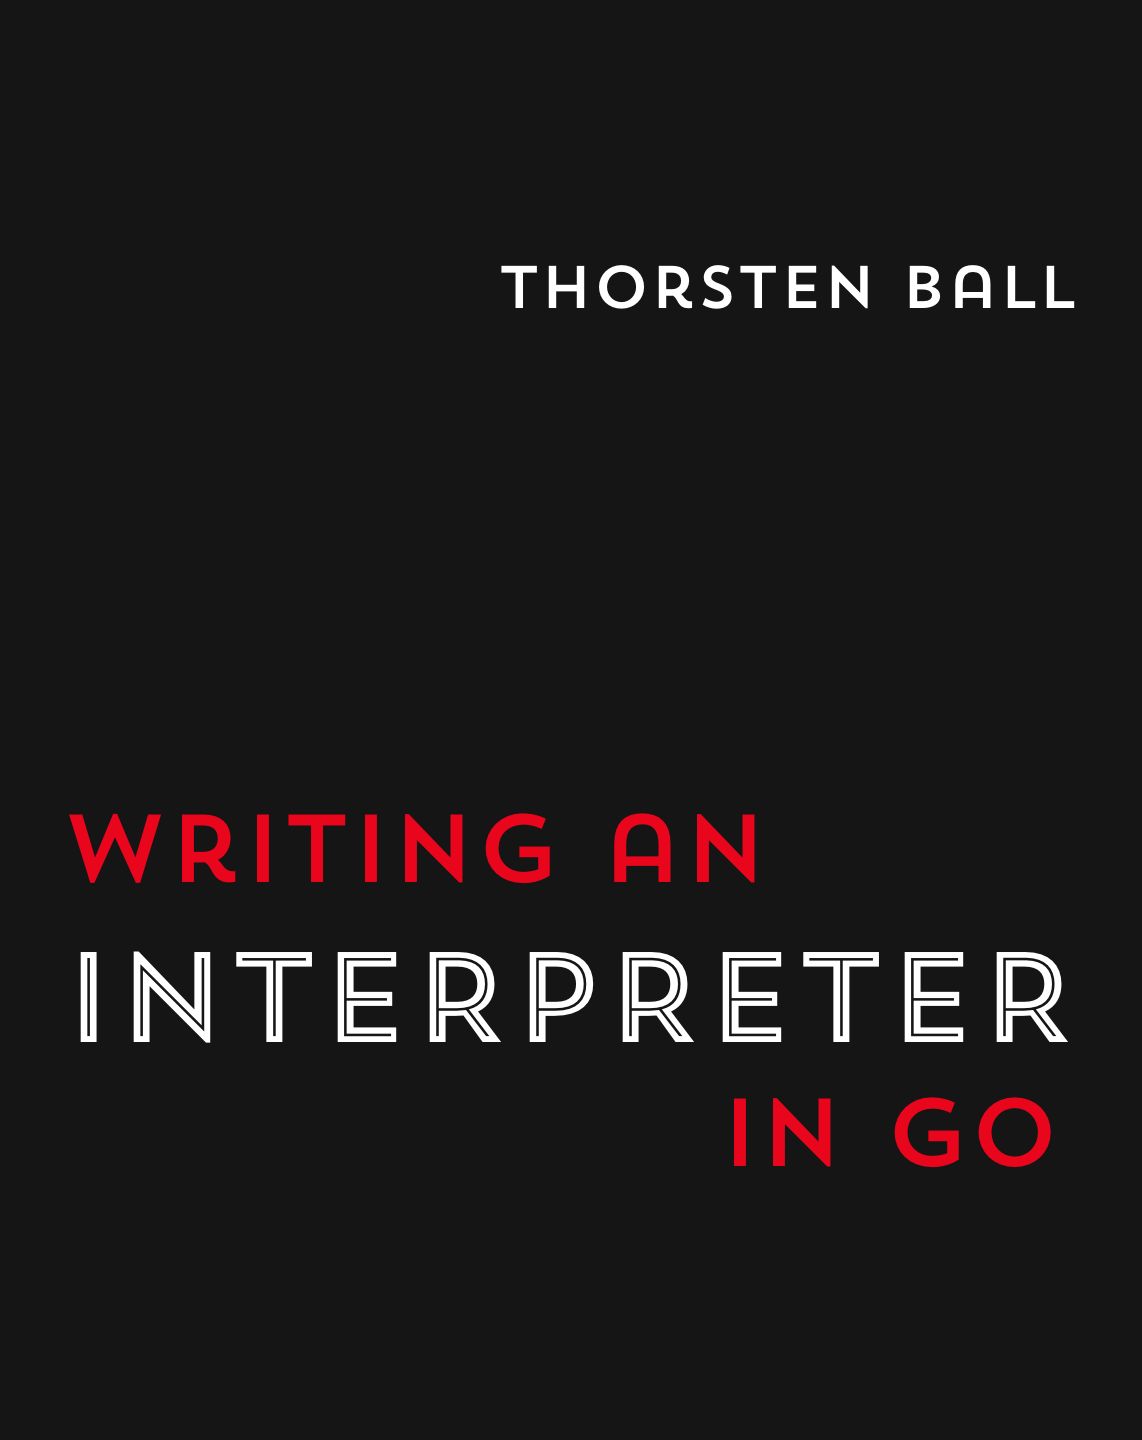 Thorsten Ball: Writing An Interpreter In Go (EBook, 2020, Thorsten Ball)